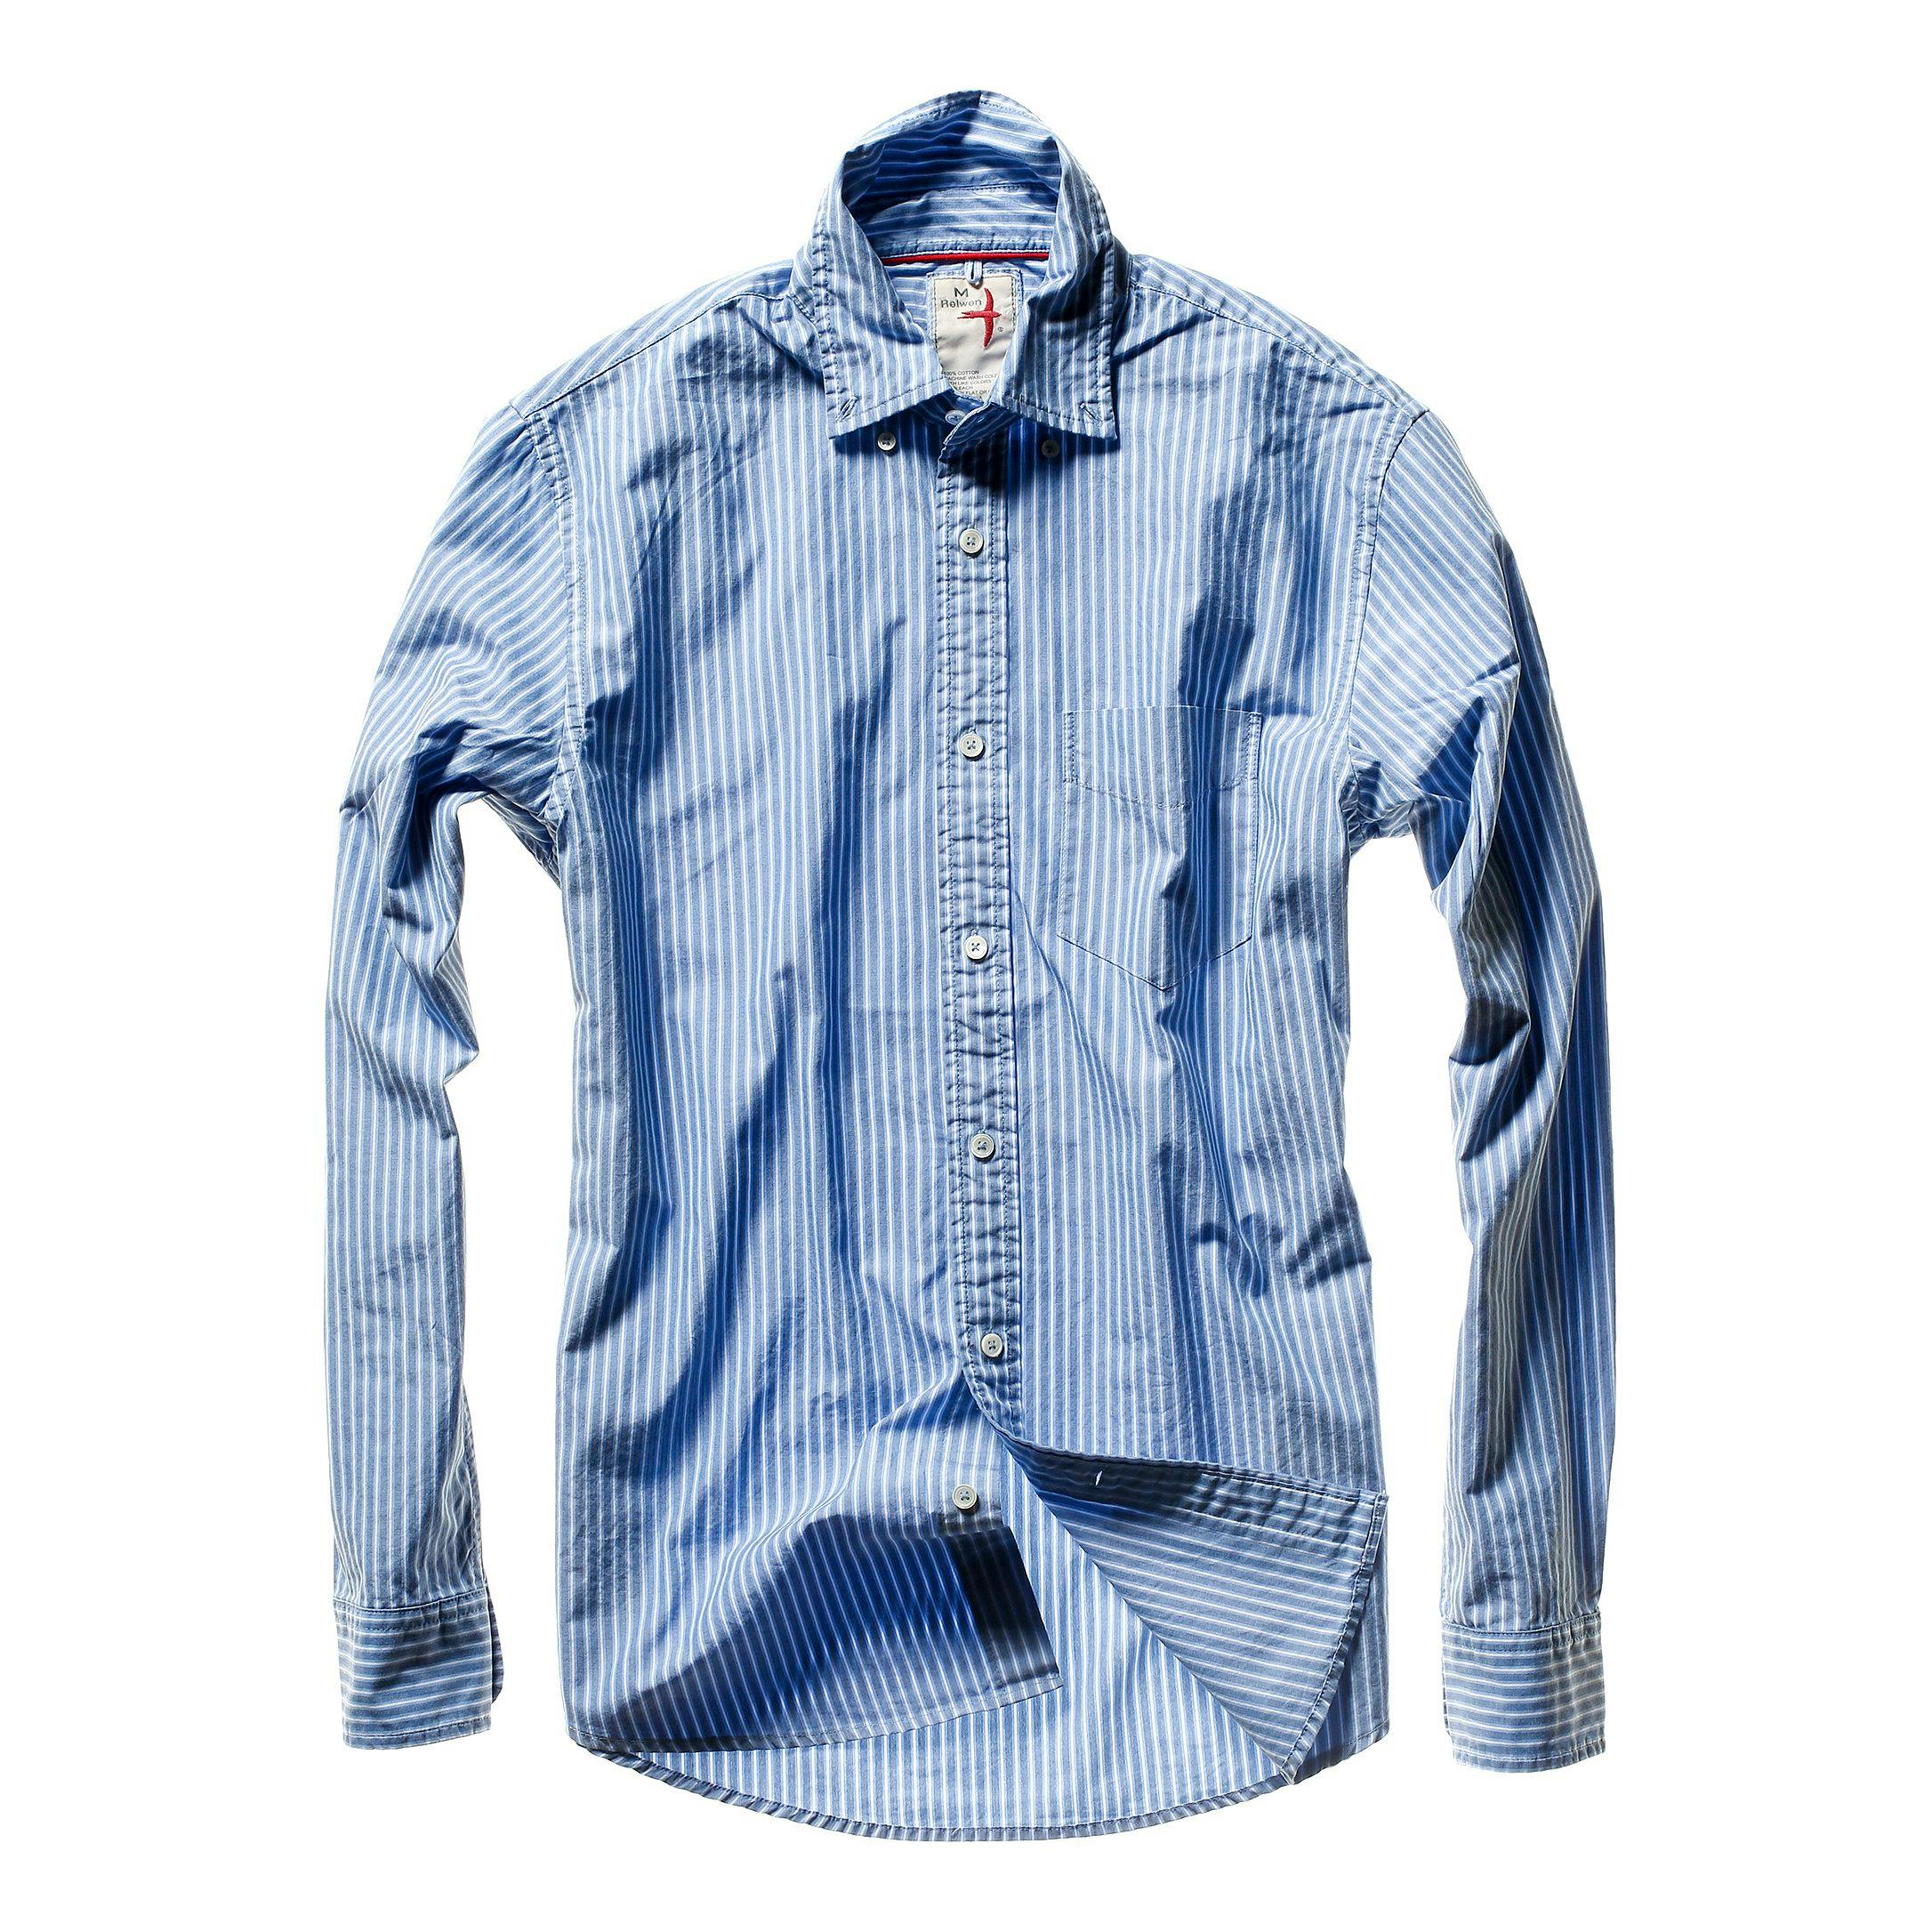 Relwen Highland Blues Long Sleeve Shirt - Blue/White Stripe